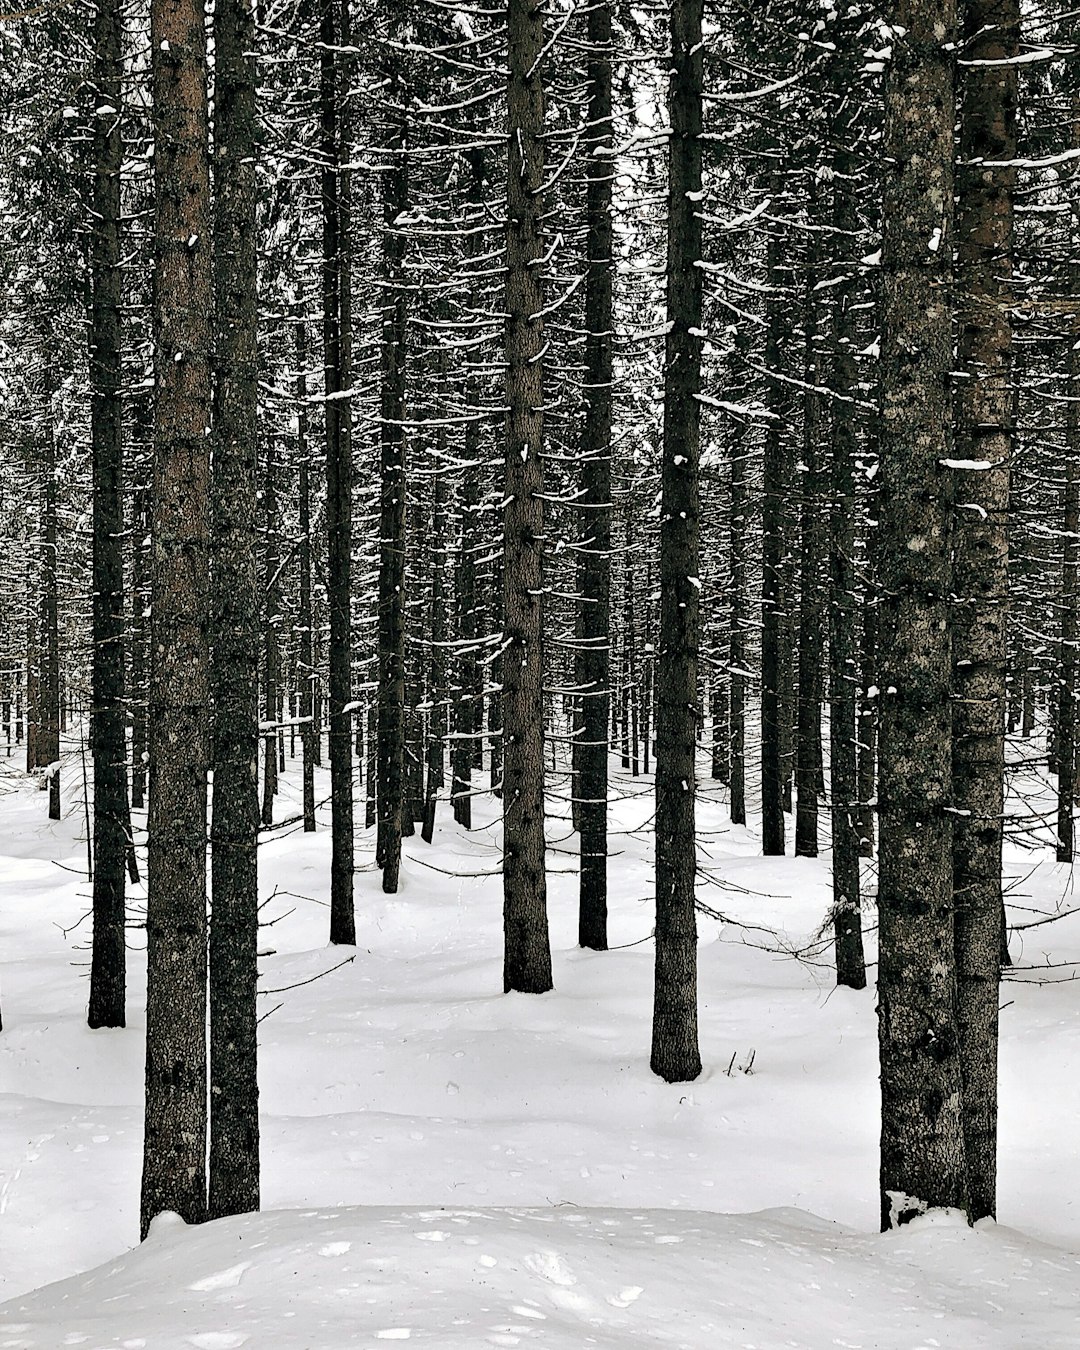 Spruce-fir forest photo spot Paneveggio - Pale di San Martino Braies